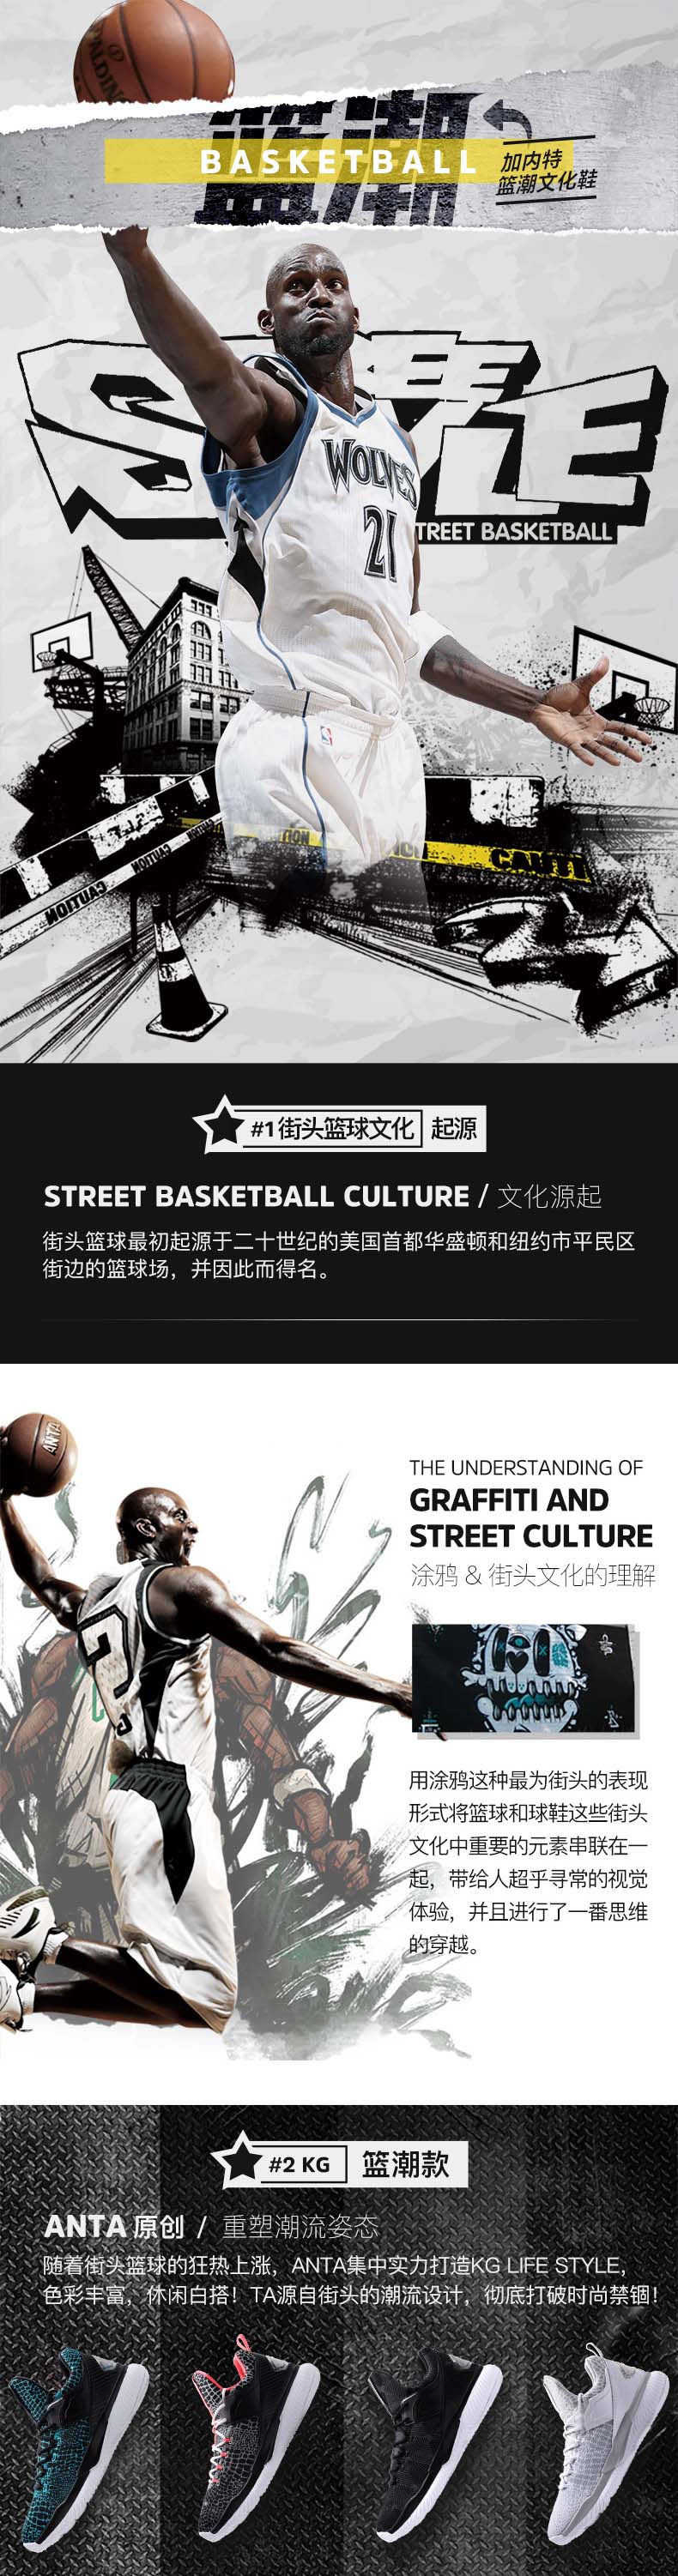 ANTA KG Street Basketball Culture Shoes